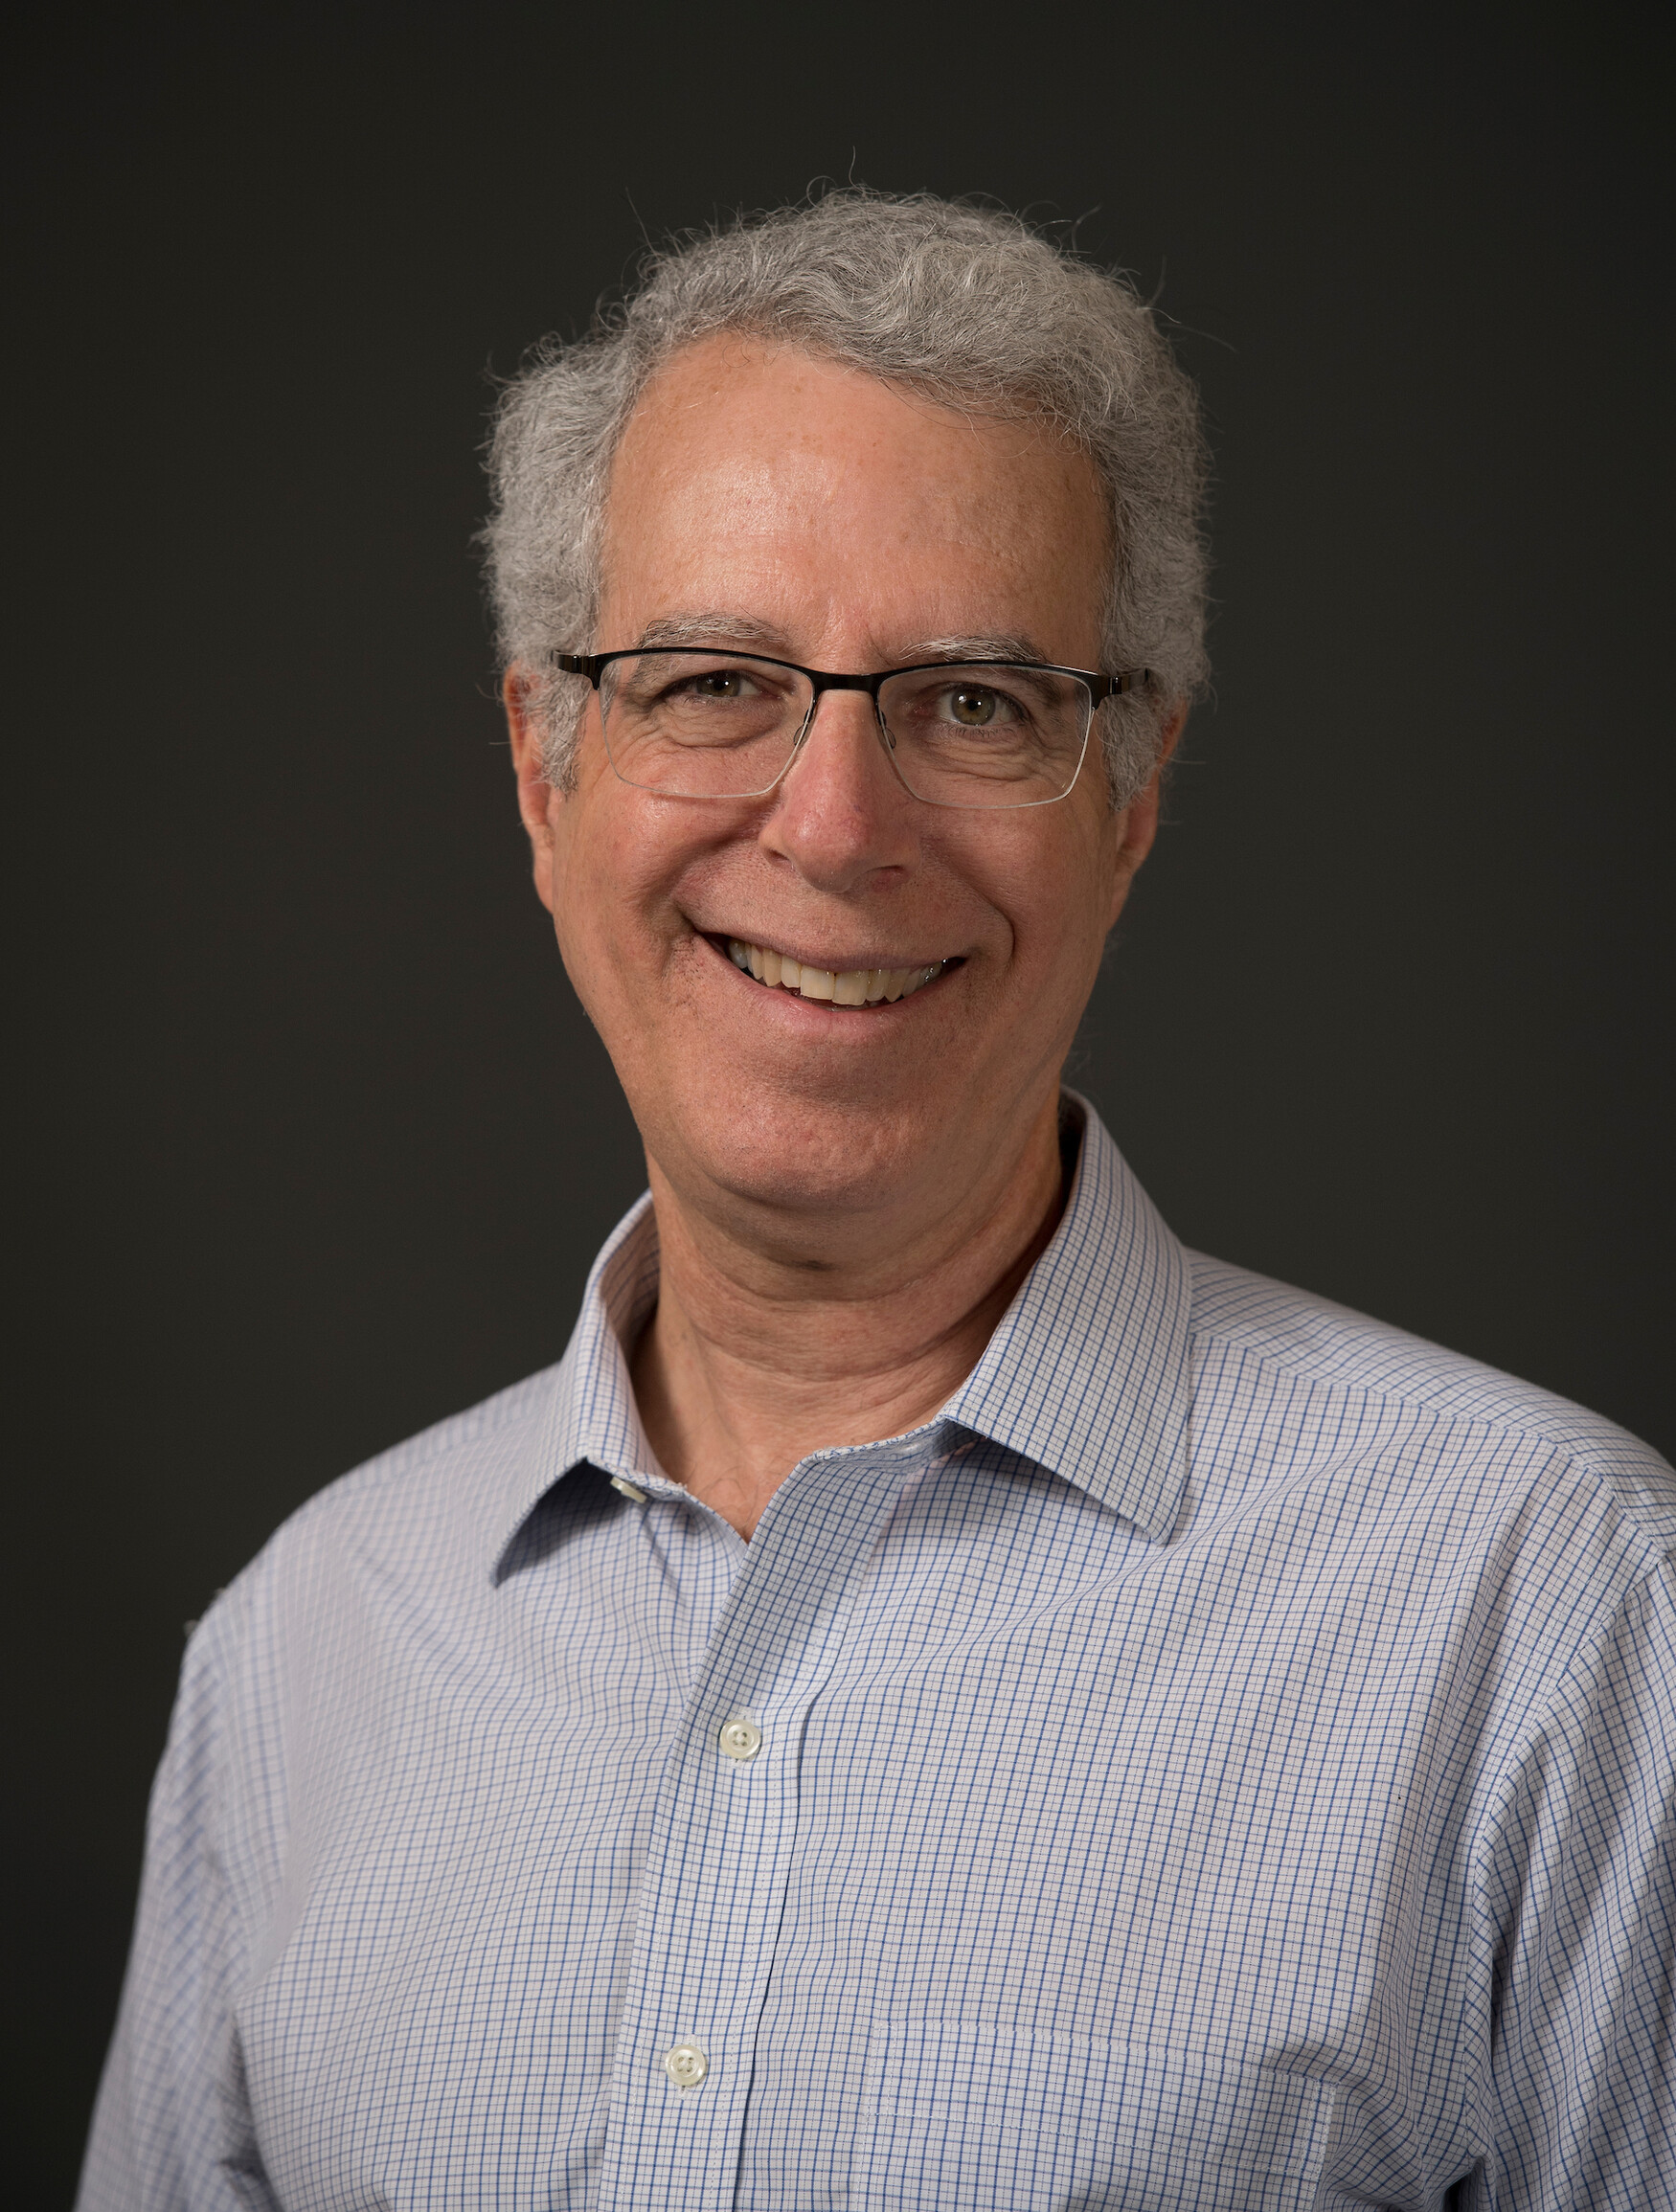 Photograph of Dr. Richard Glazier